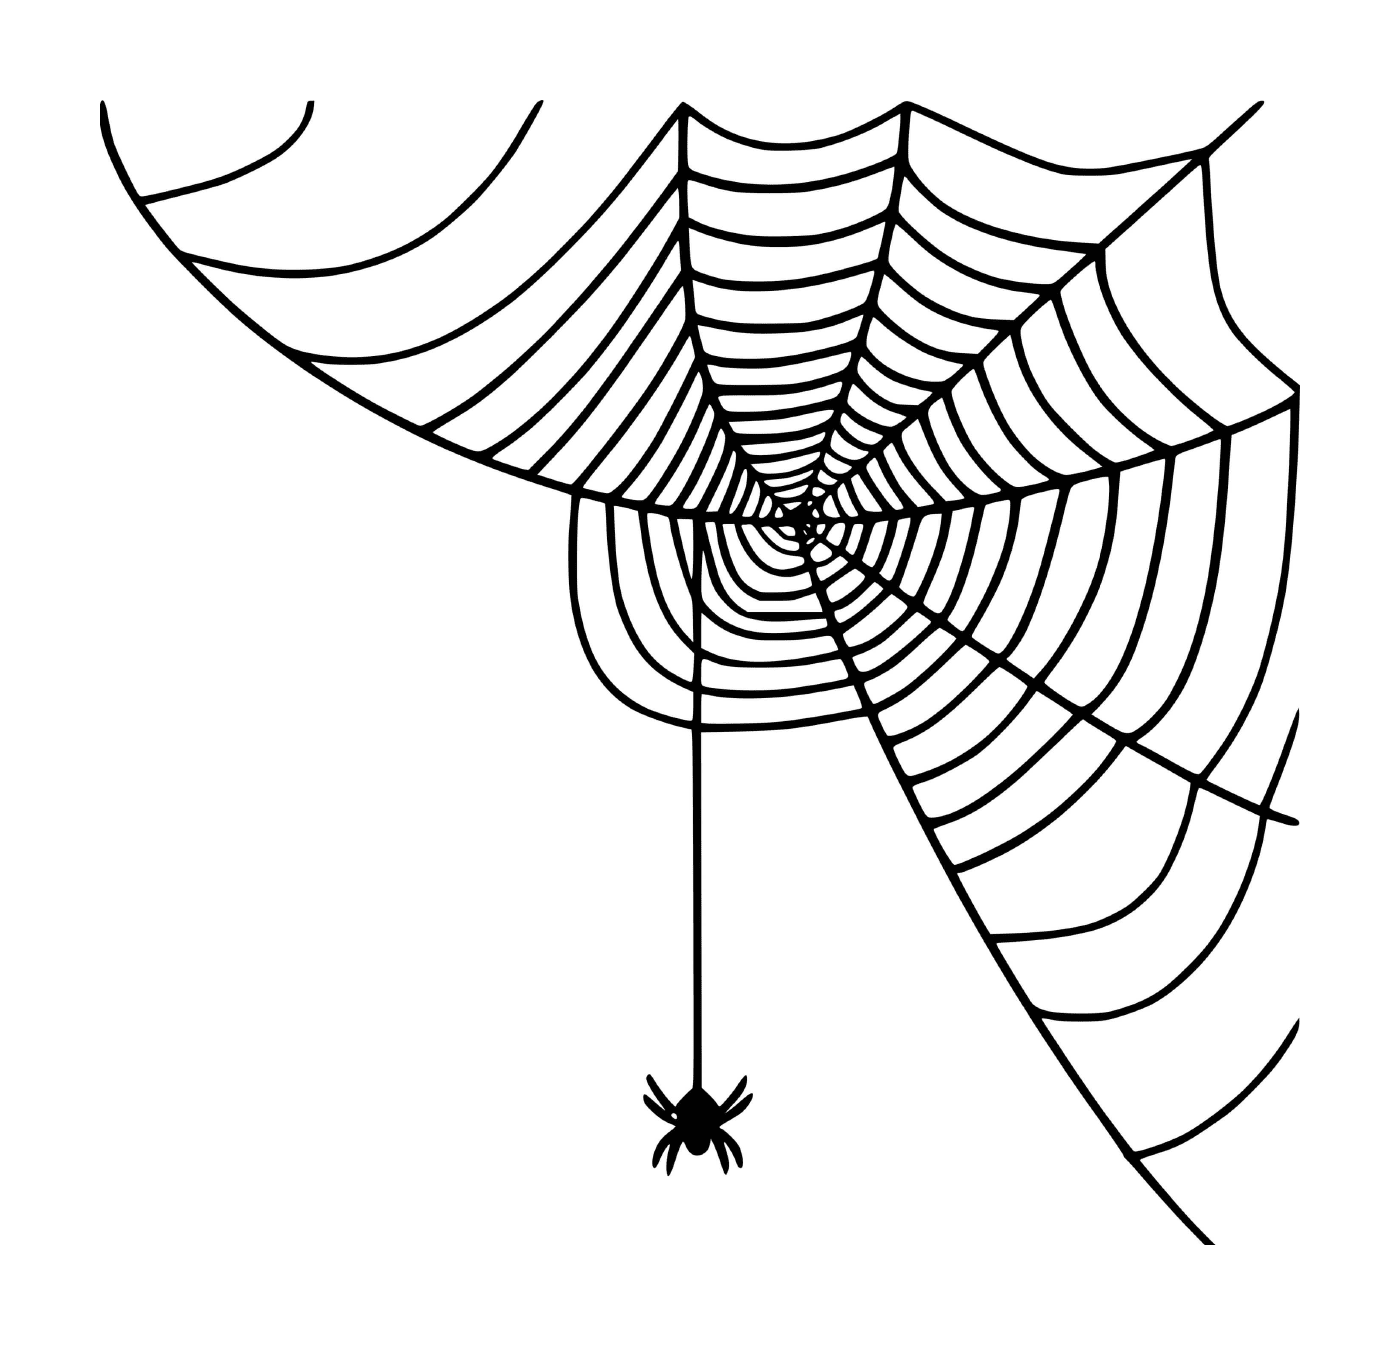  Маленькая пауковая паутина, измельченная пауком 